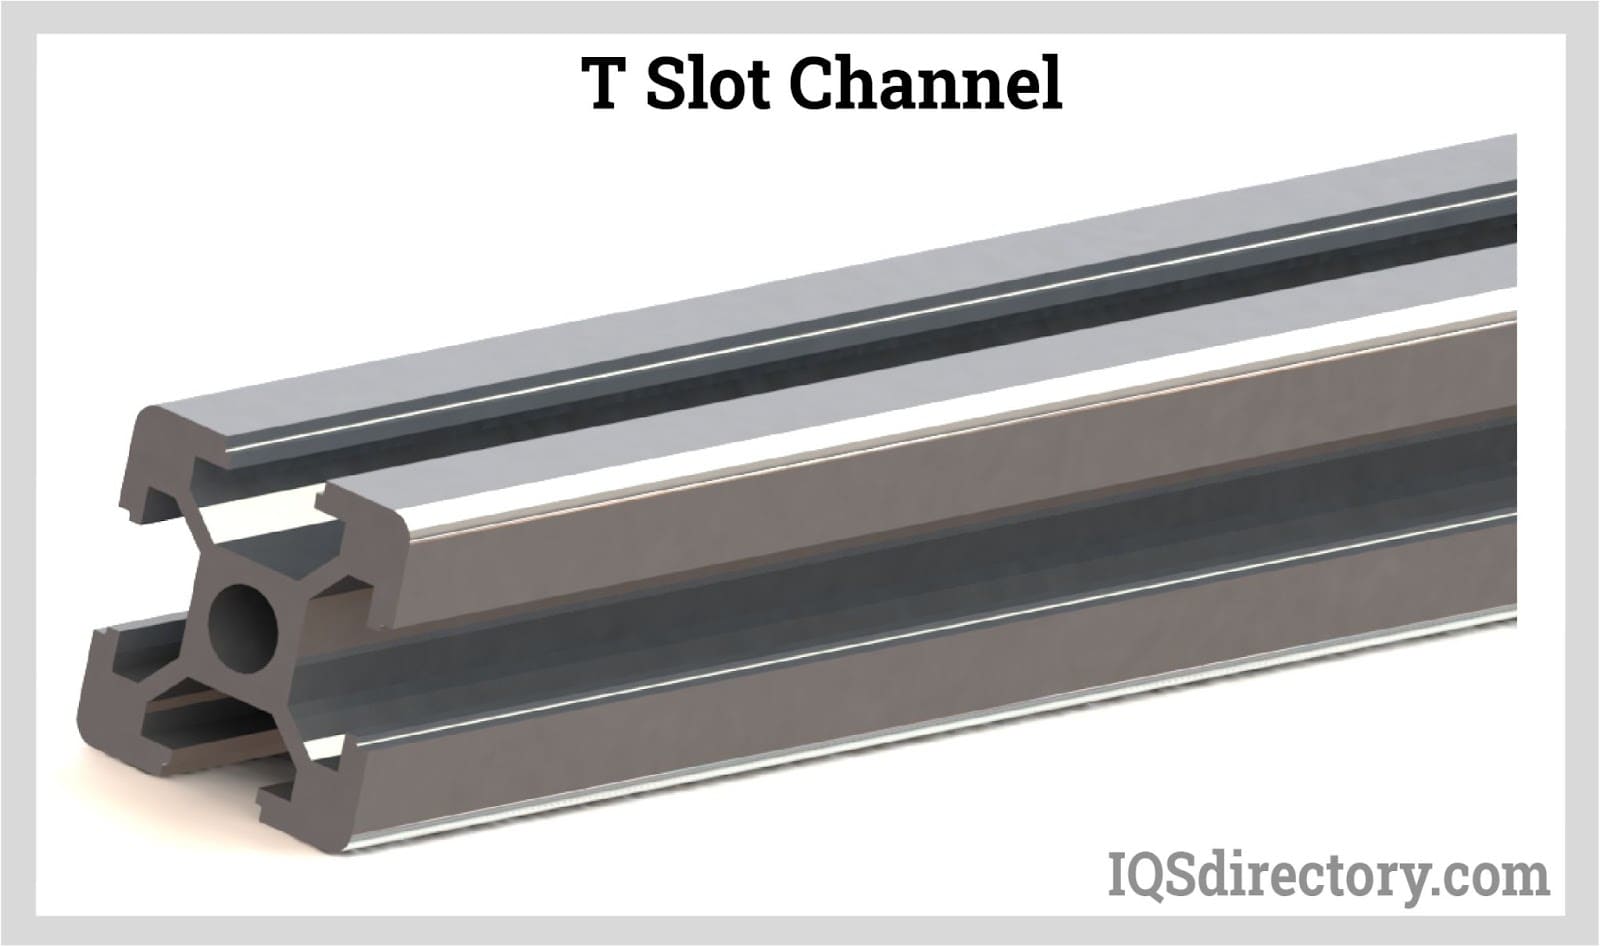 T Slot Channel